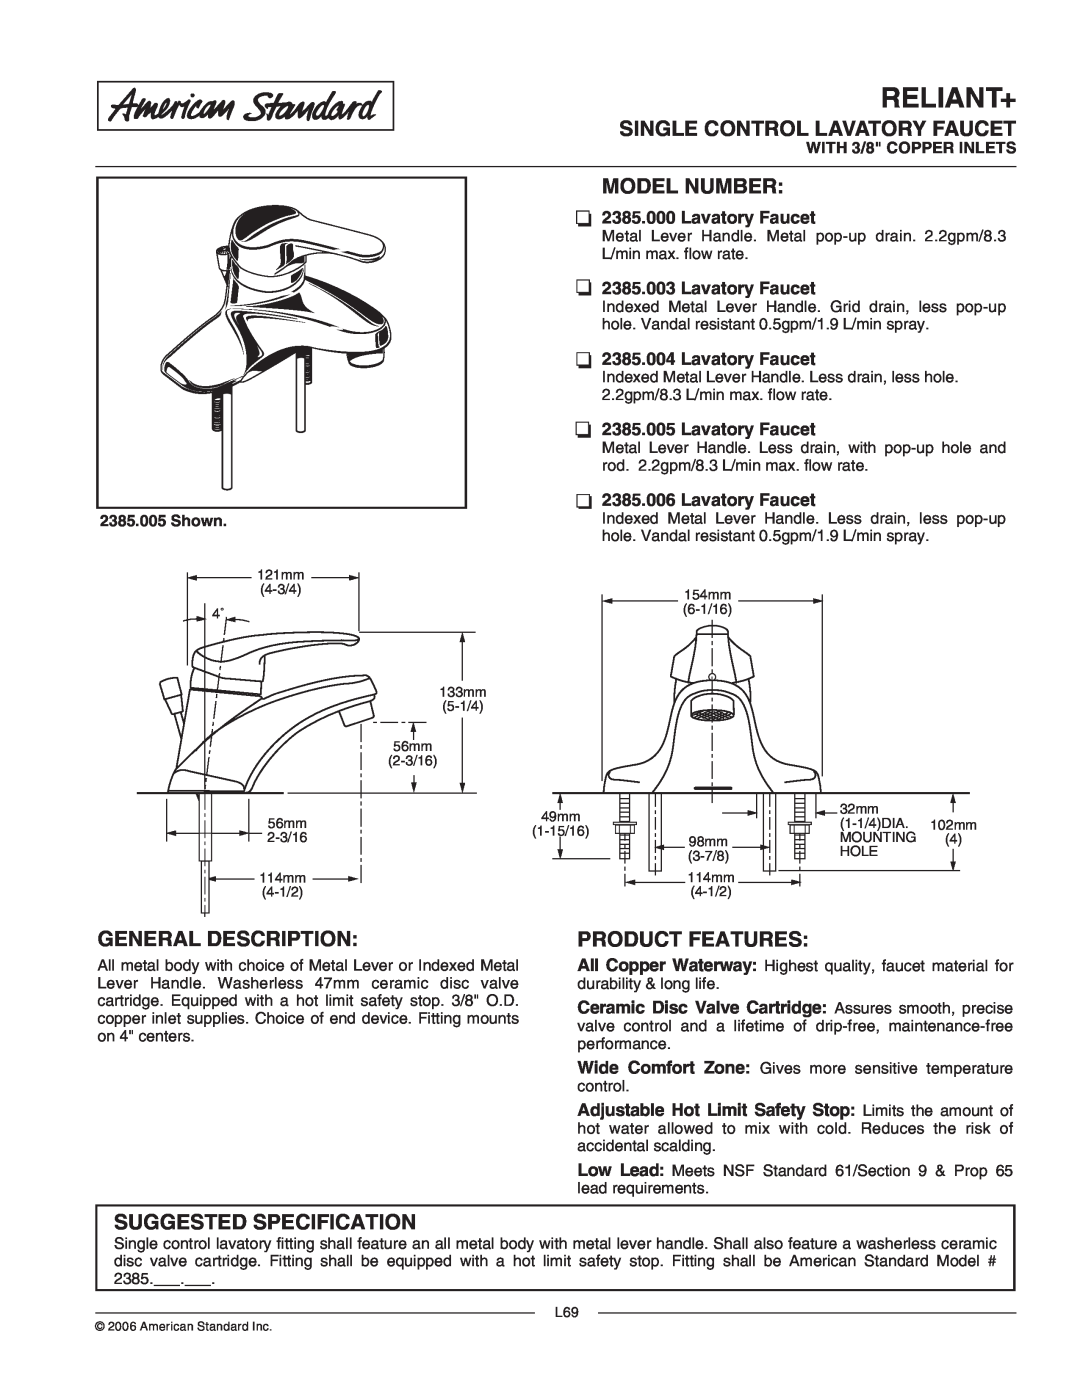 American Standard 2385.005 specifications Reliant+, Single Control Lavatory Faucet, Model Number, General Description 